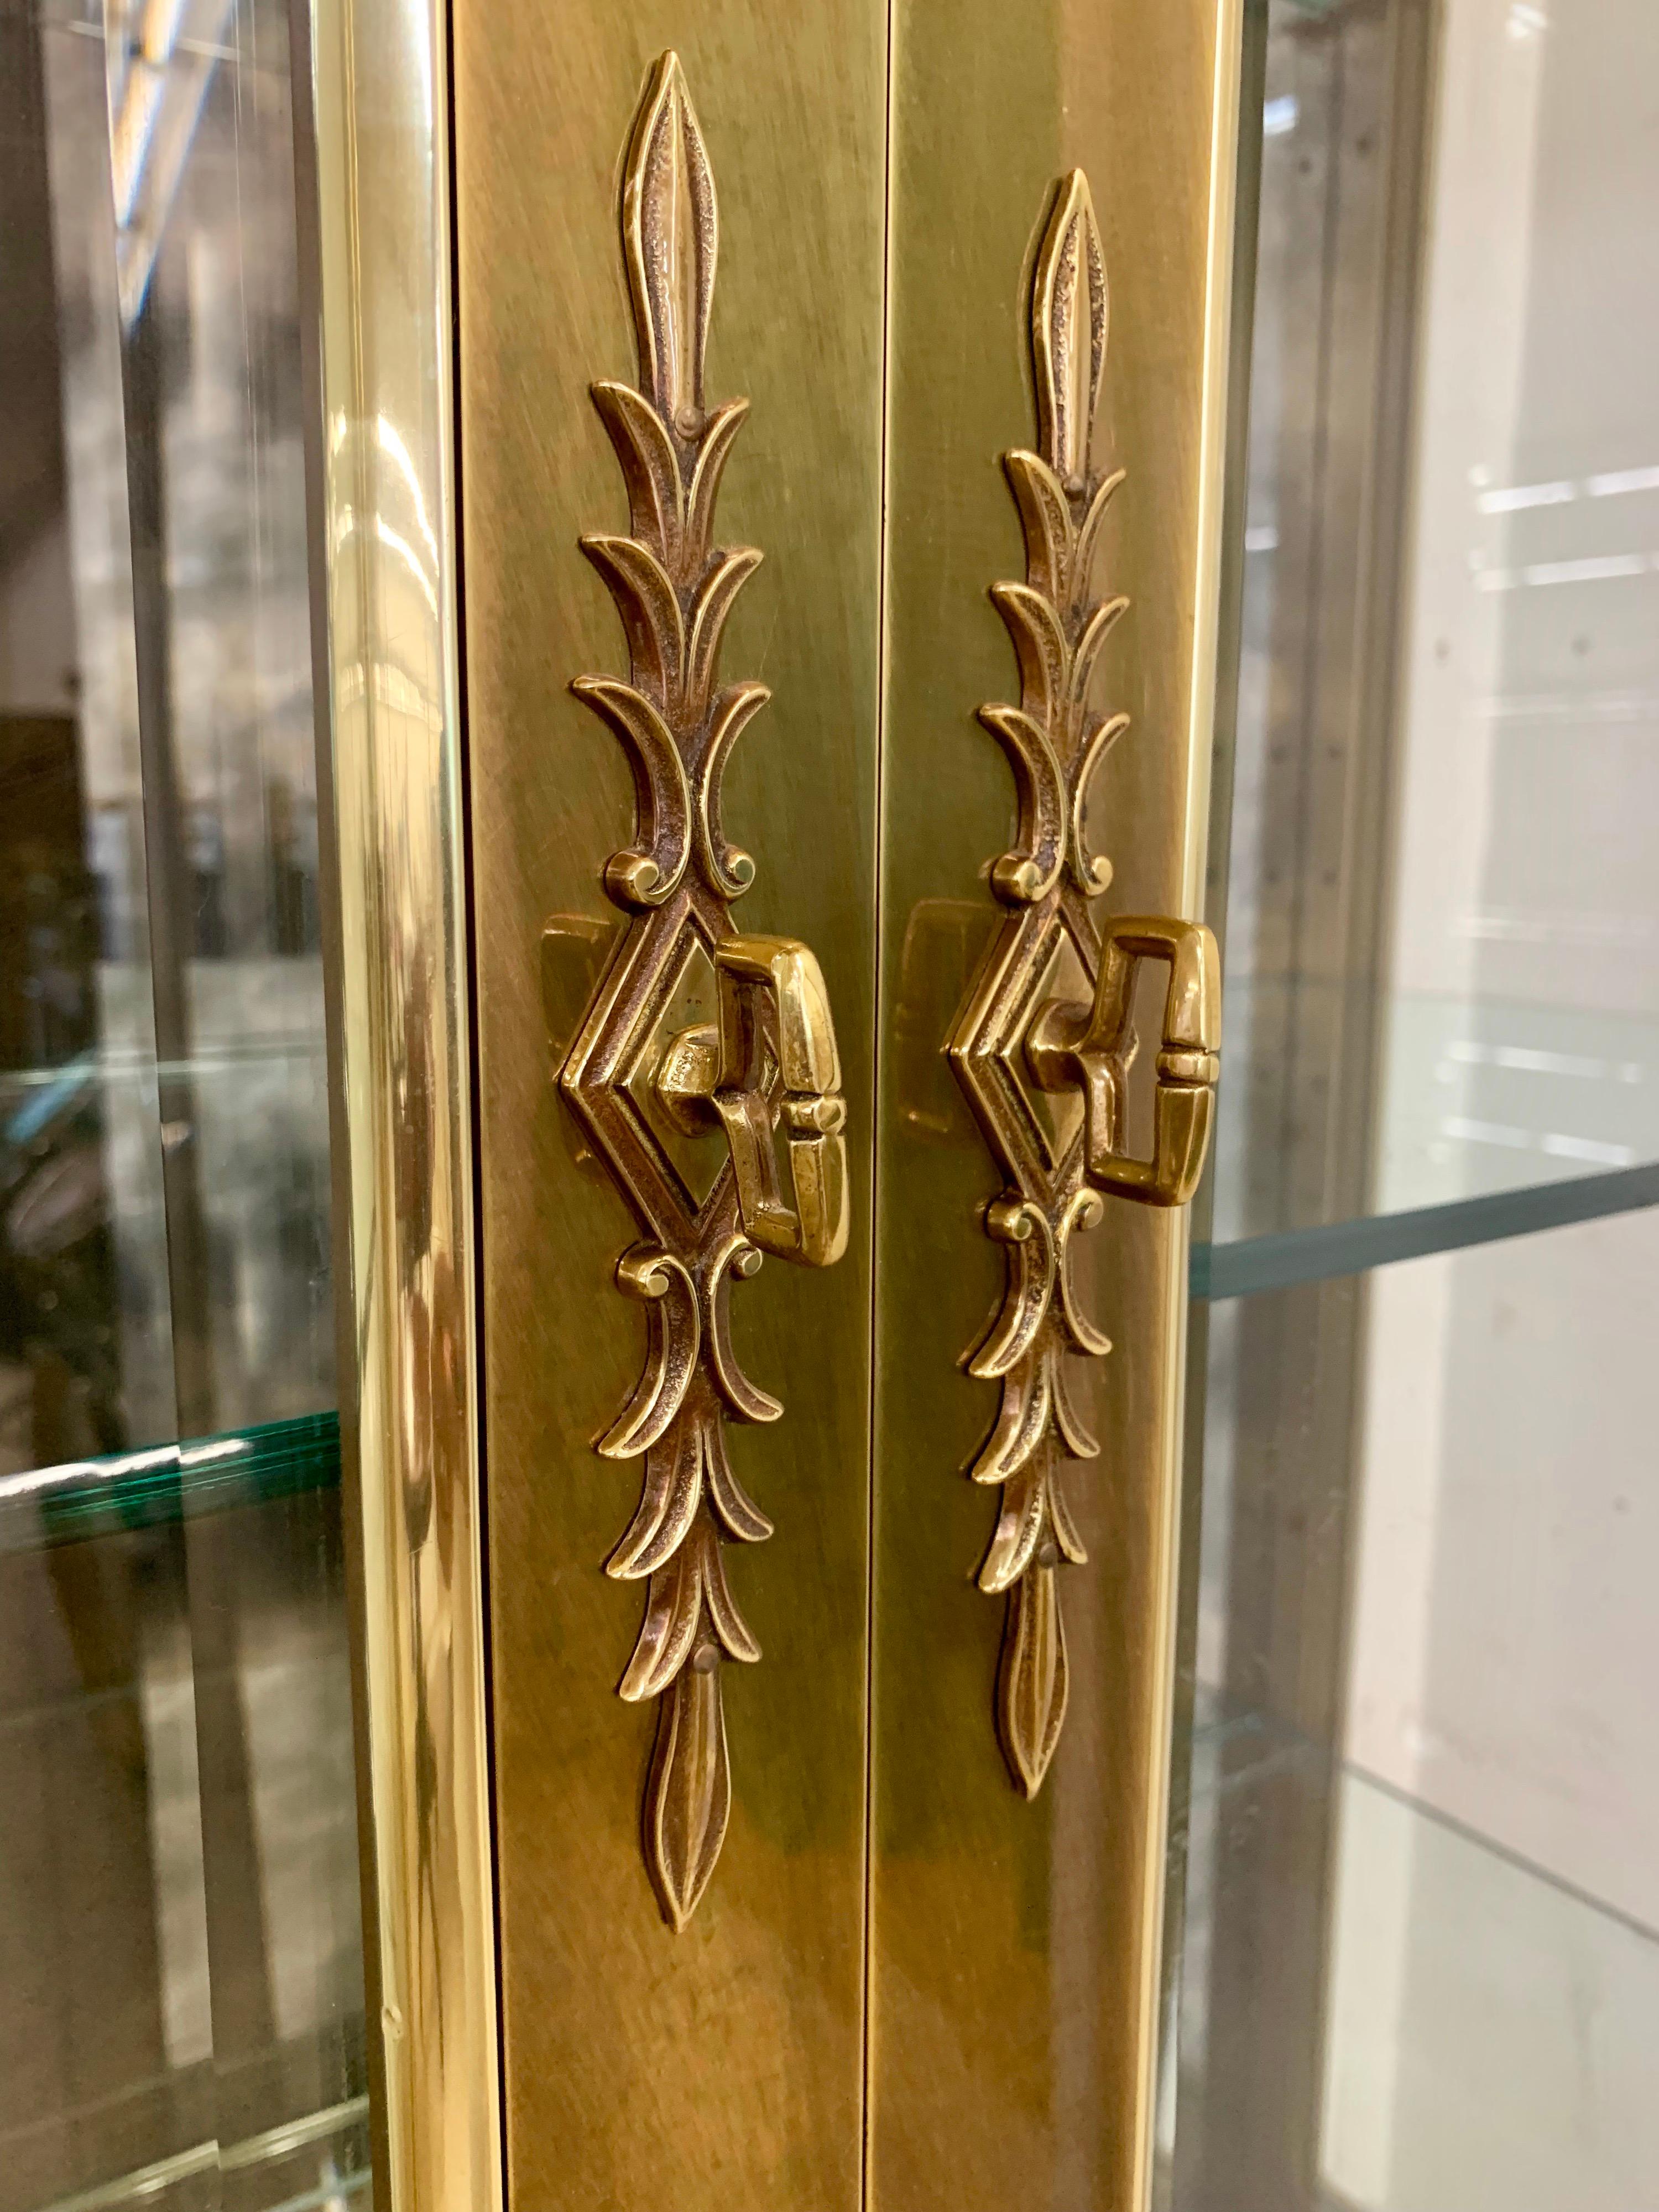 American Mastercraft Lighted Brass Display Cabinet Vitrine Iconic Mid-Century Modern